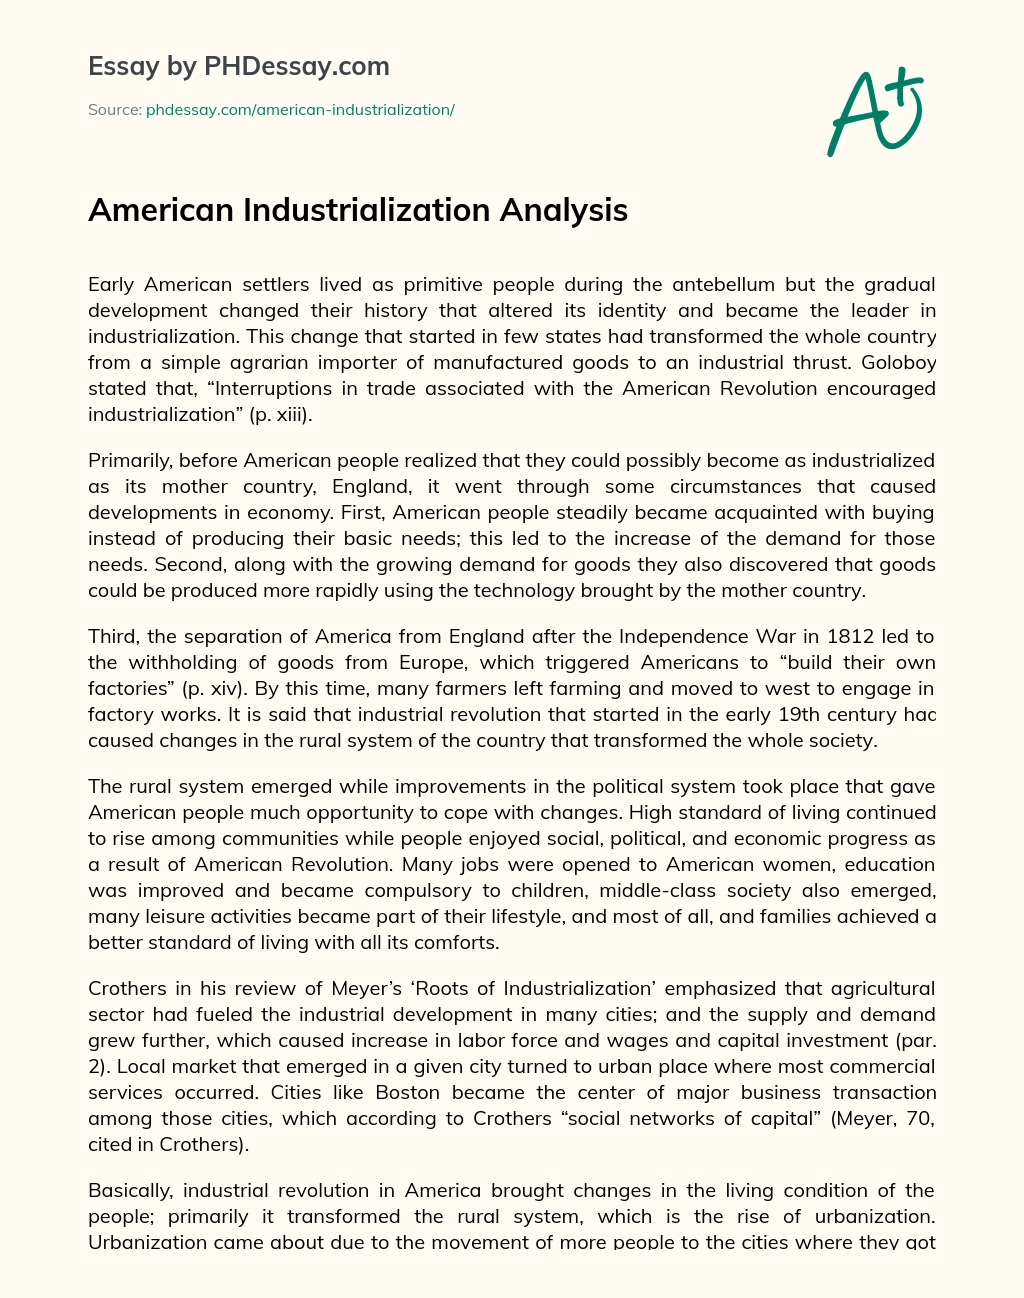 American Industrialization Analysis essay